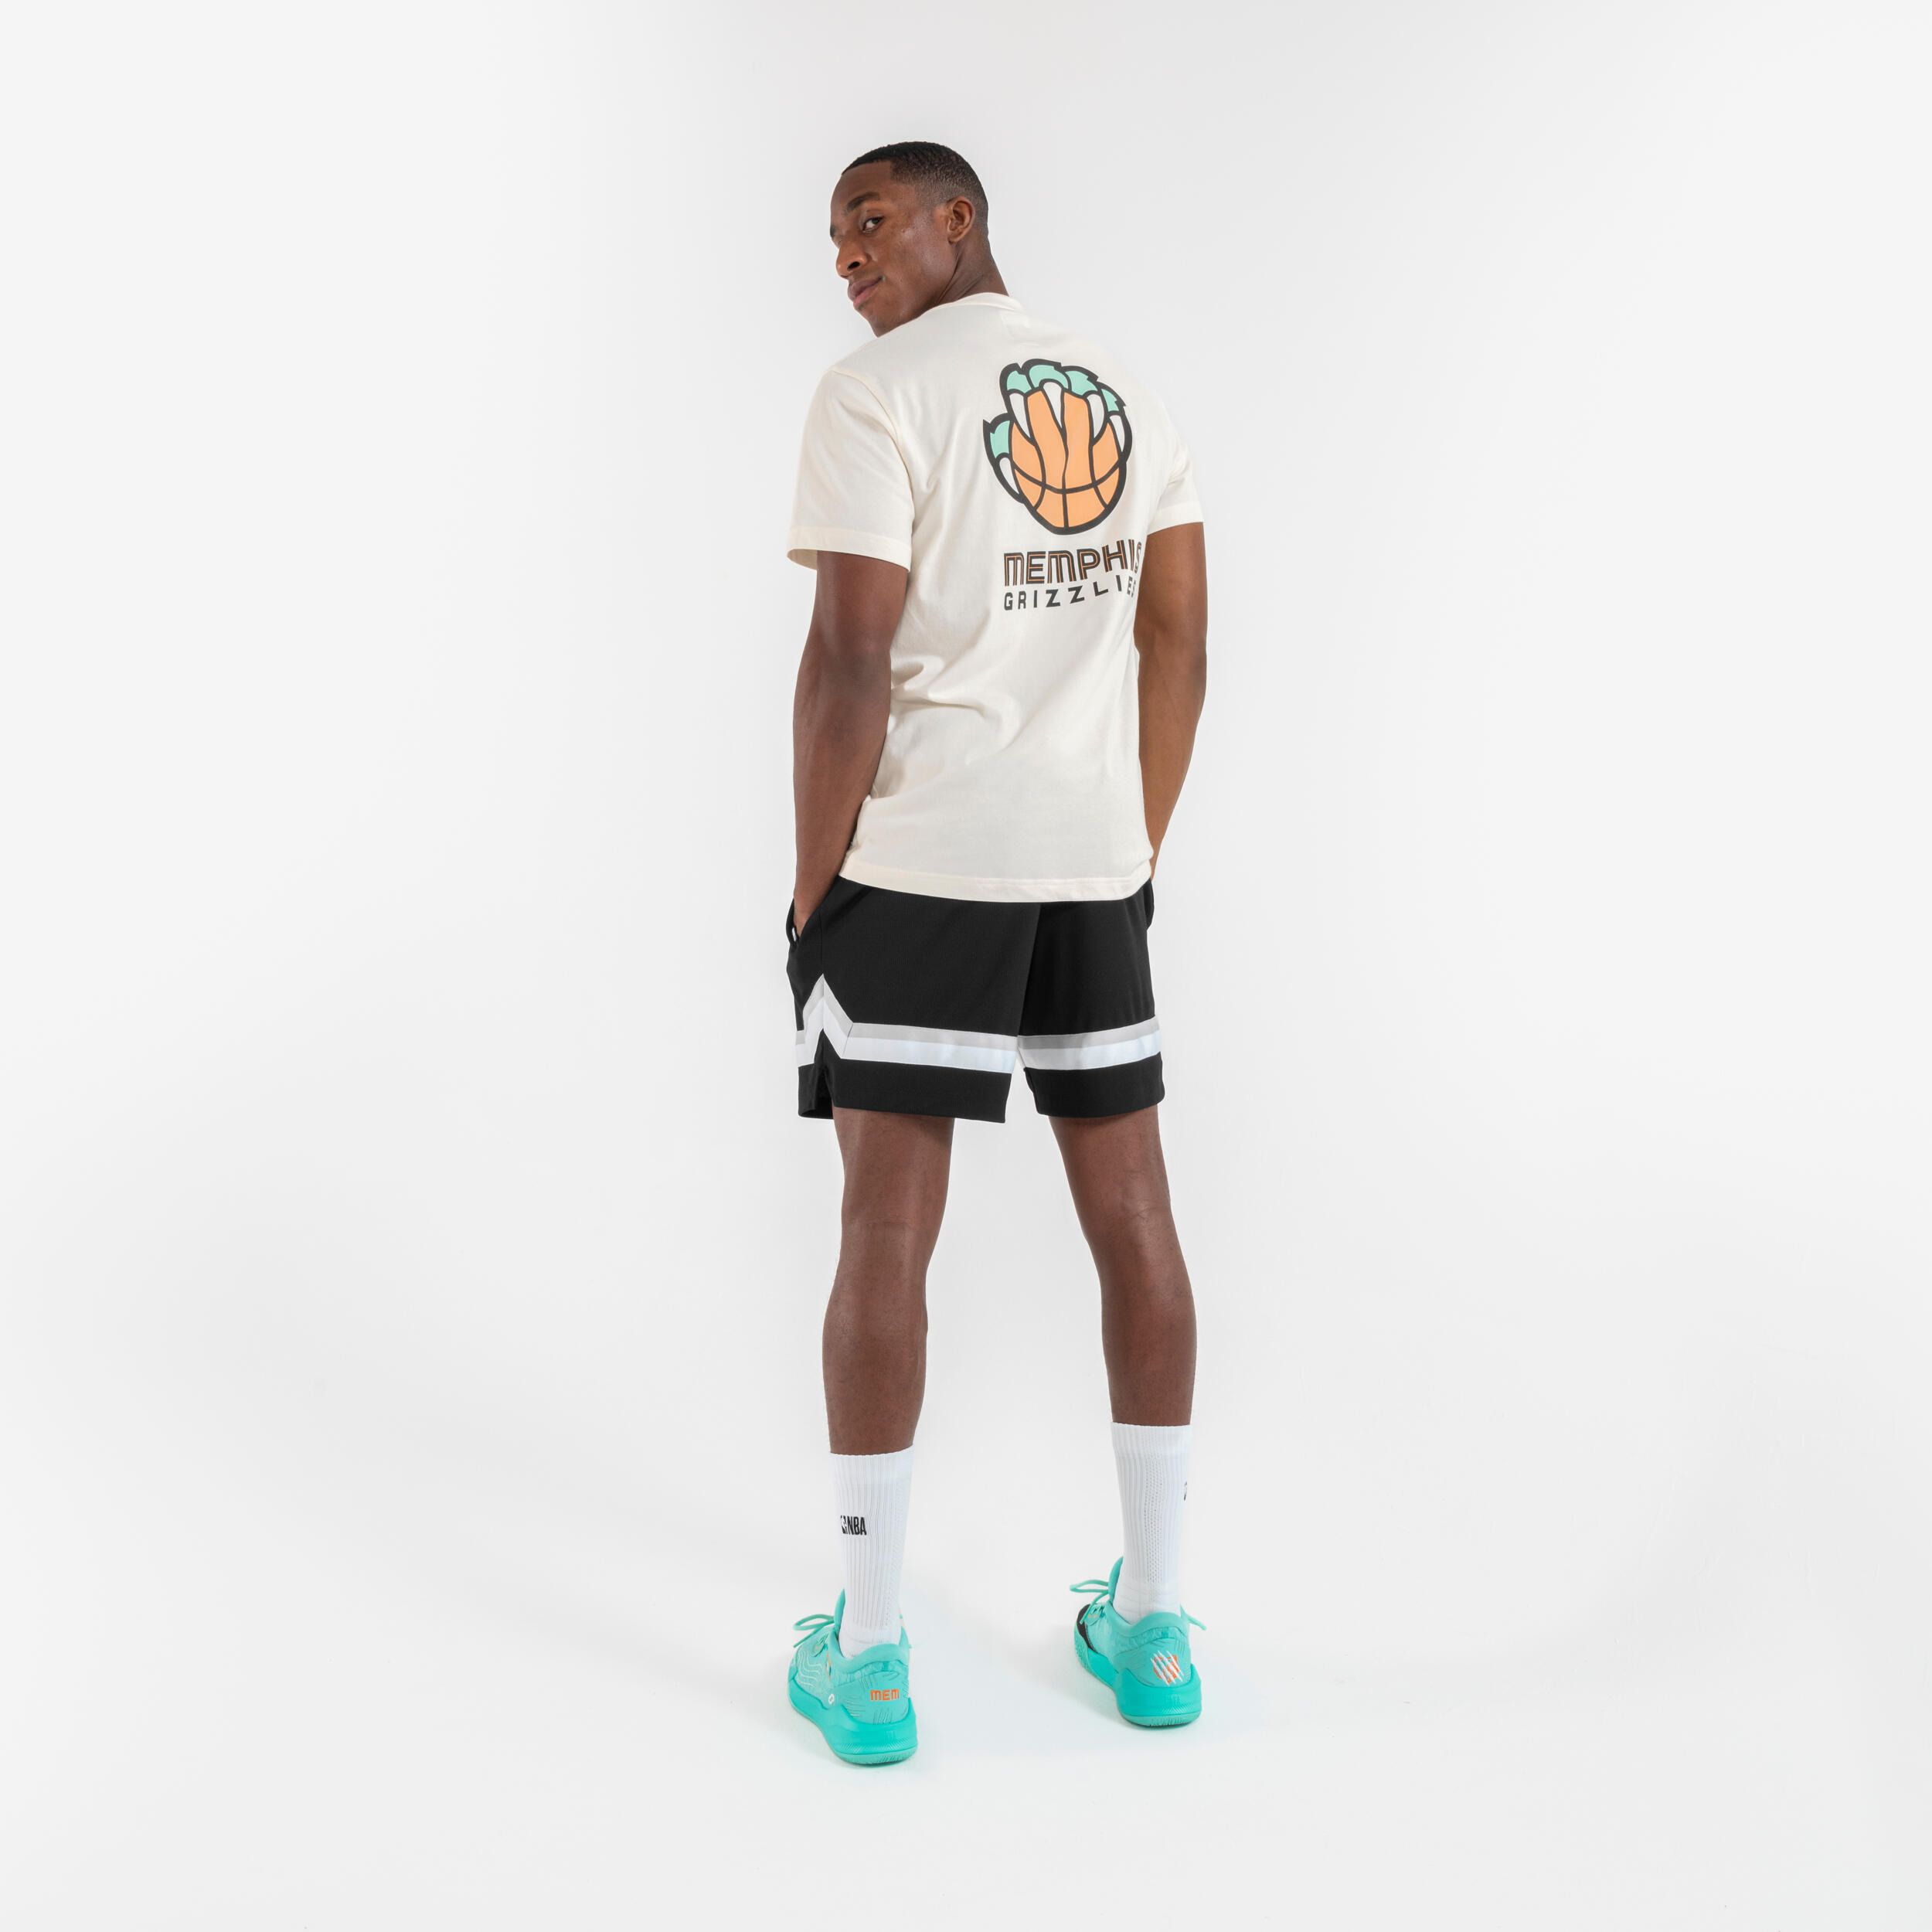 Unisex Basketball T-Shirt 900 AD - NBA Grizzlies/White 5/8